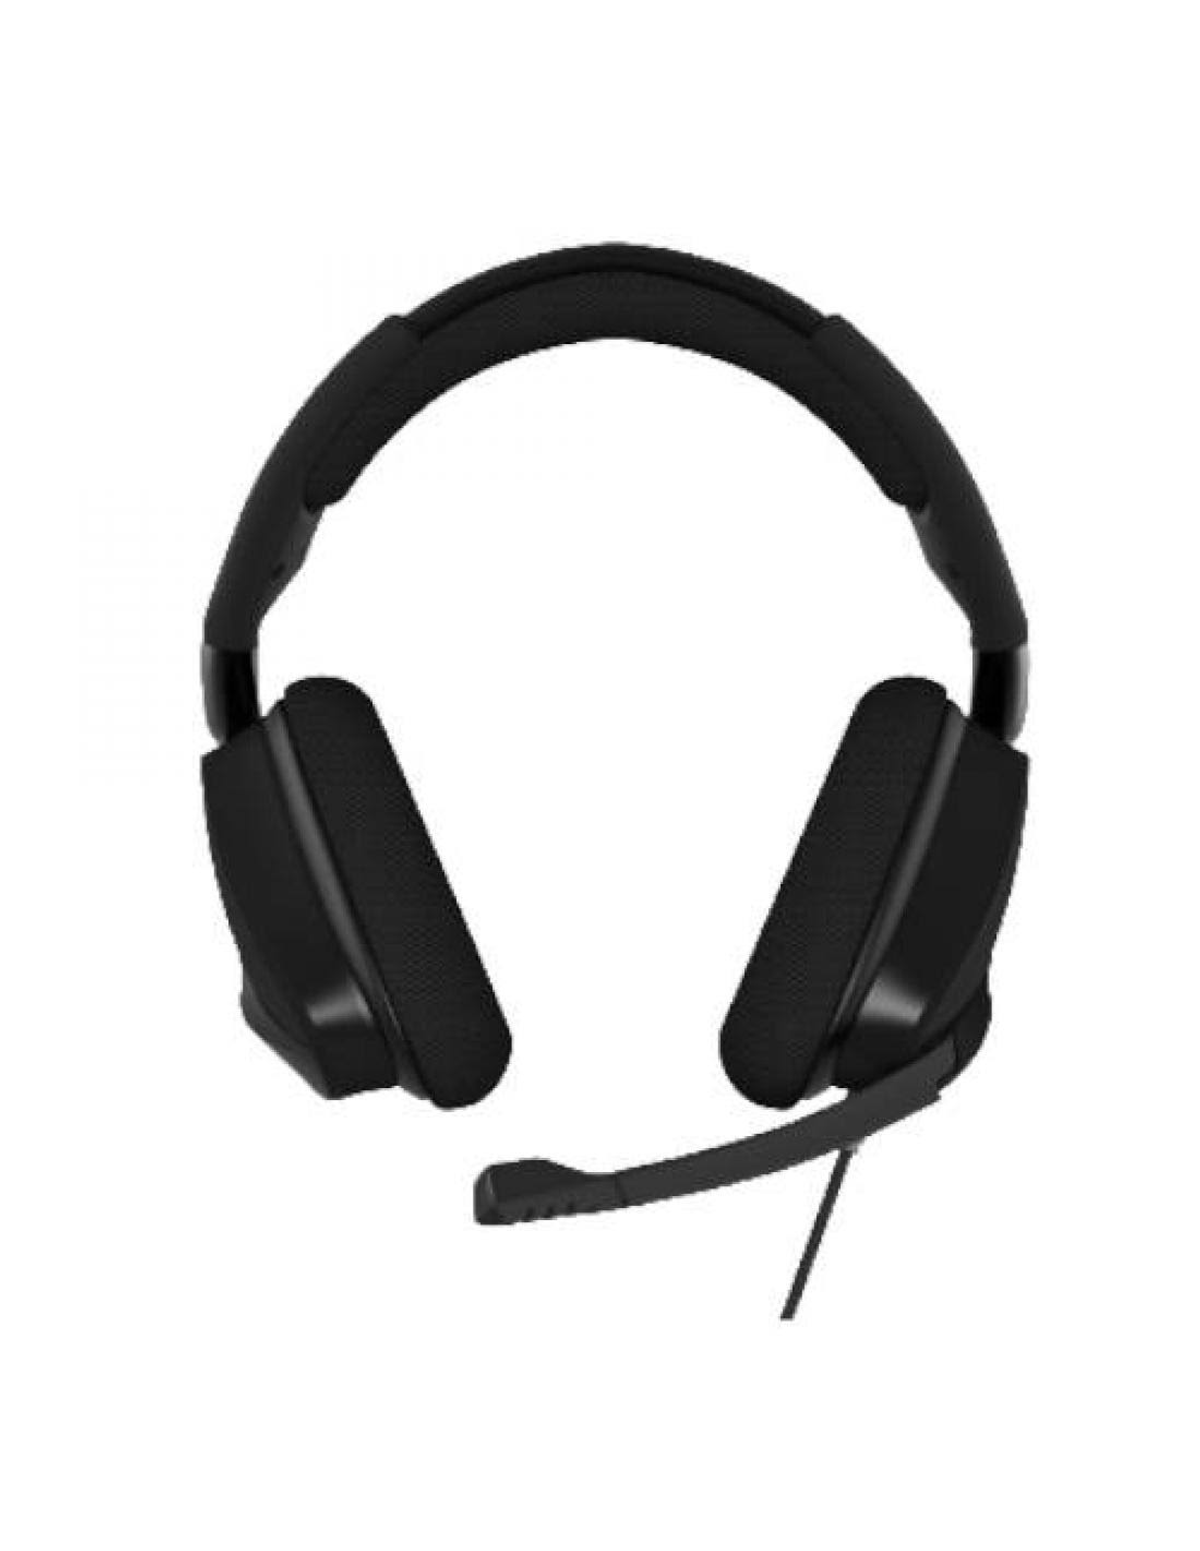 CORSAIR CA-9011205-EU VOID ELITE SURROUND CARBON, Gaming Over-ear Carbon Headset